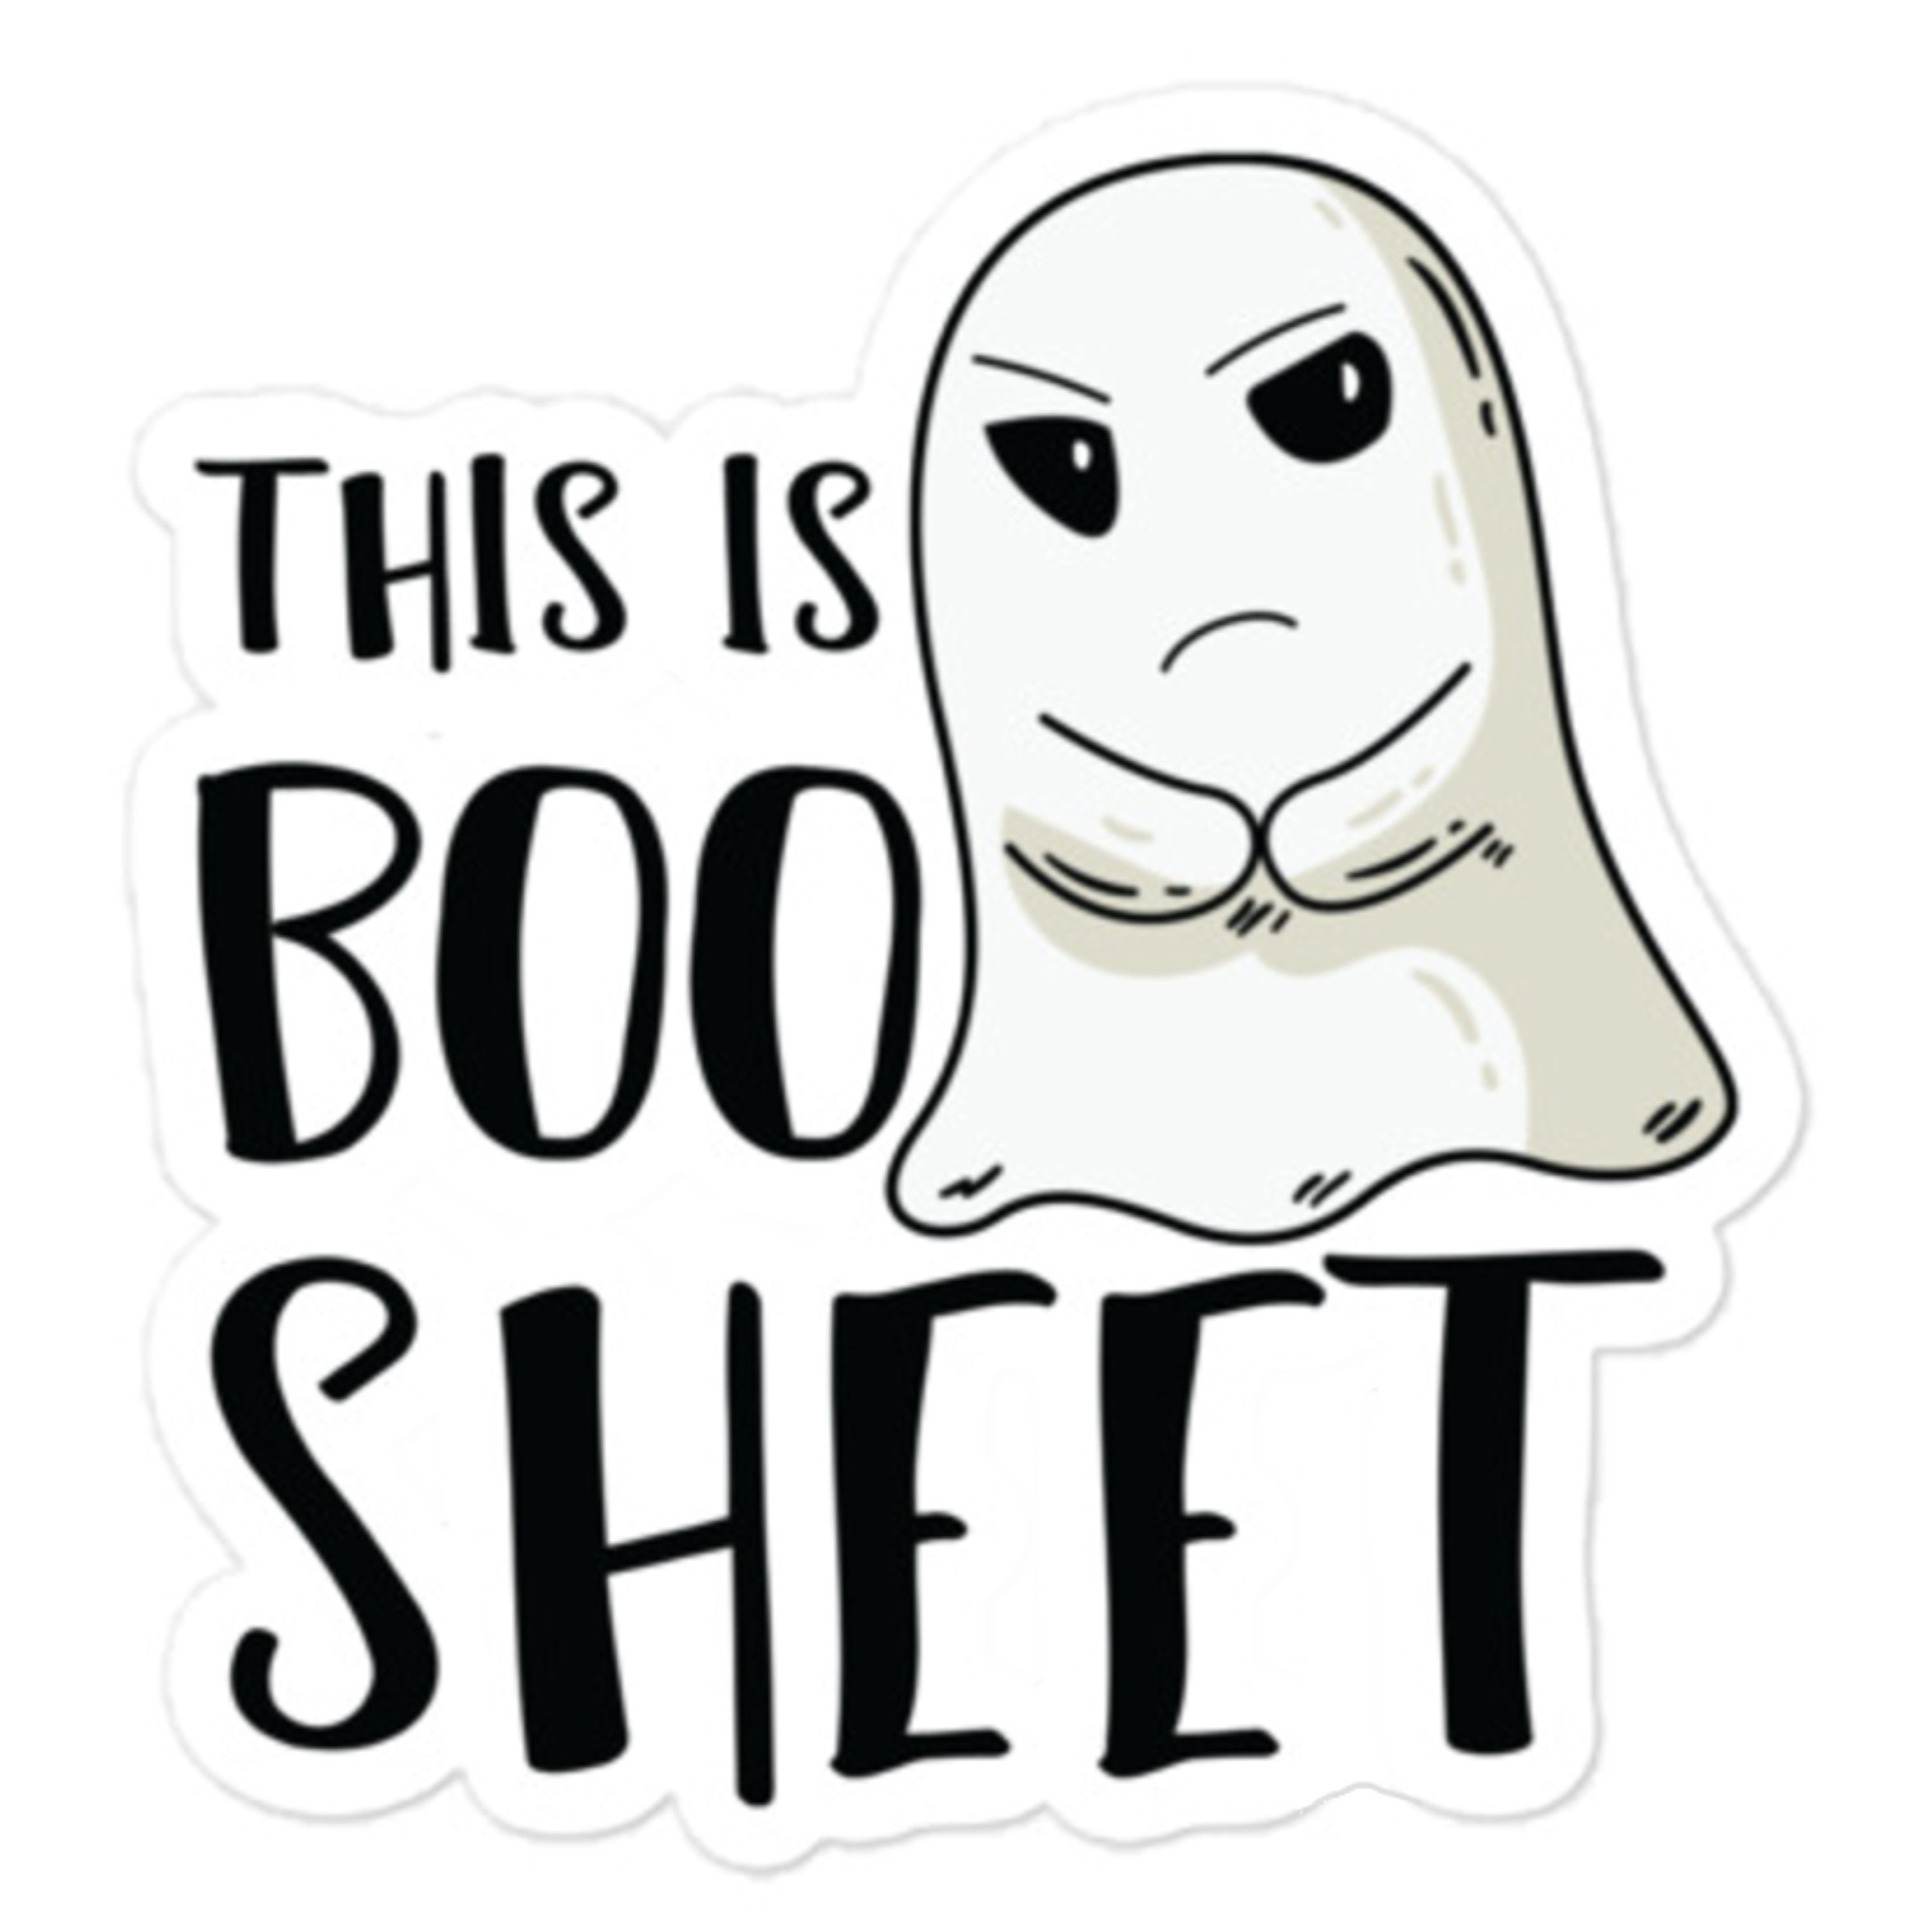 Discover This is Boo Sheet Waterproof Glossy Sticker, Ghost Sticker, Halloween Vinyl Sticker, Spooky Laptop Sticker, Boo Sticker, Ghostie Funny Gift